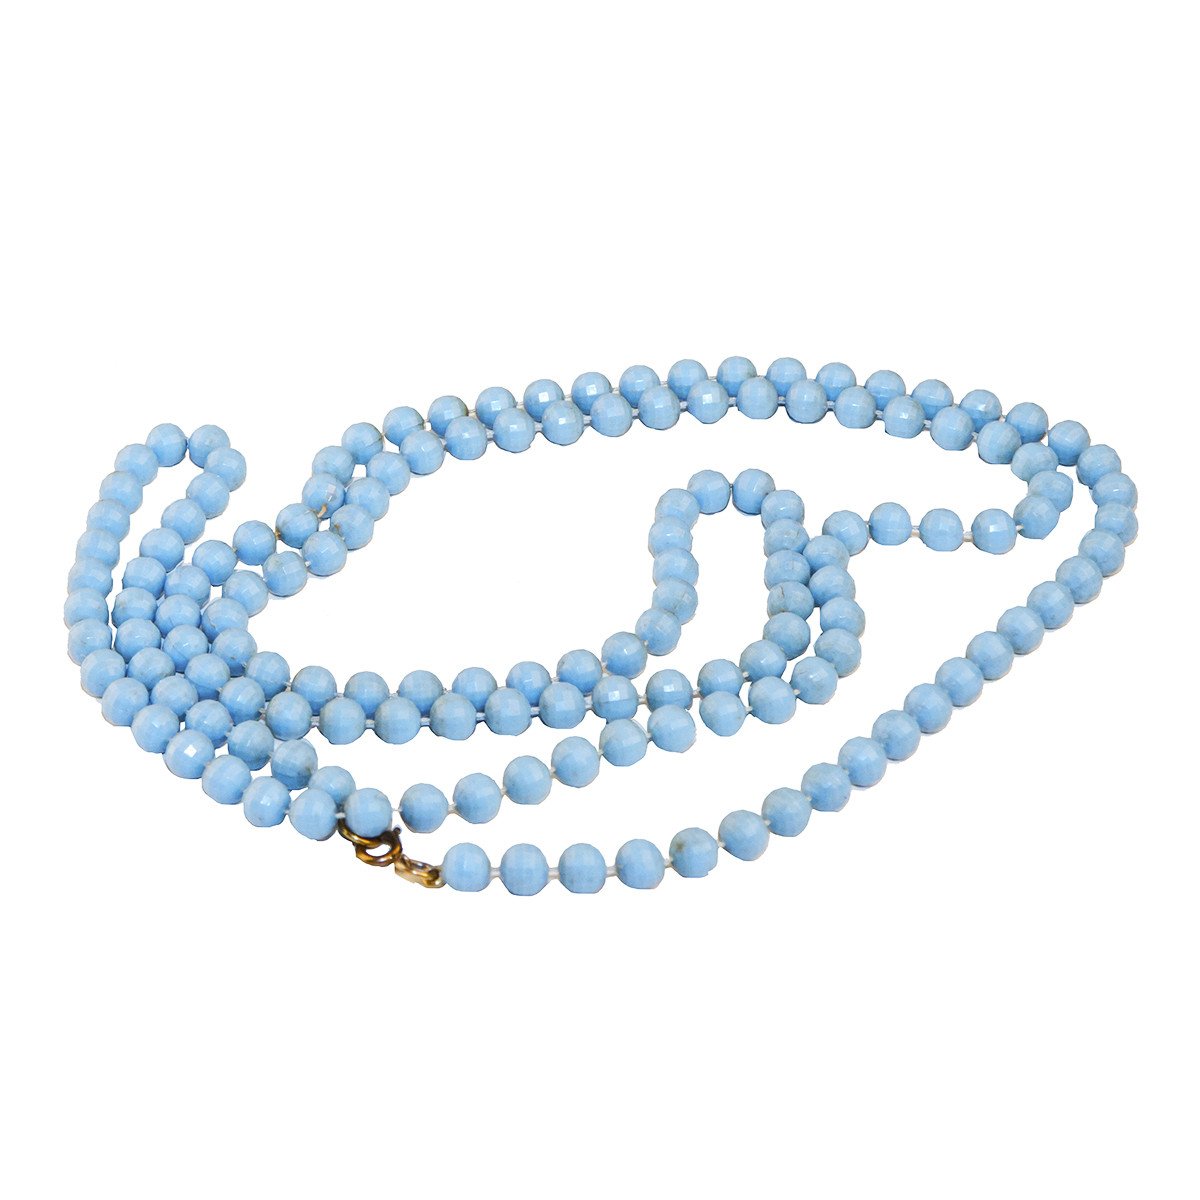 Light blue necklace